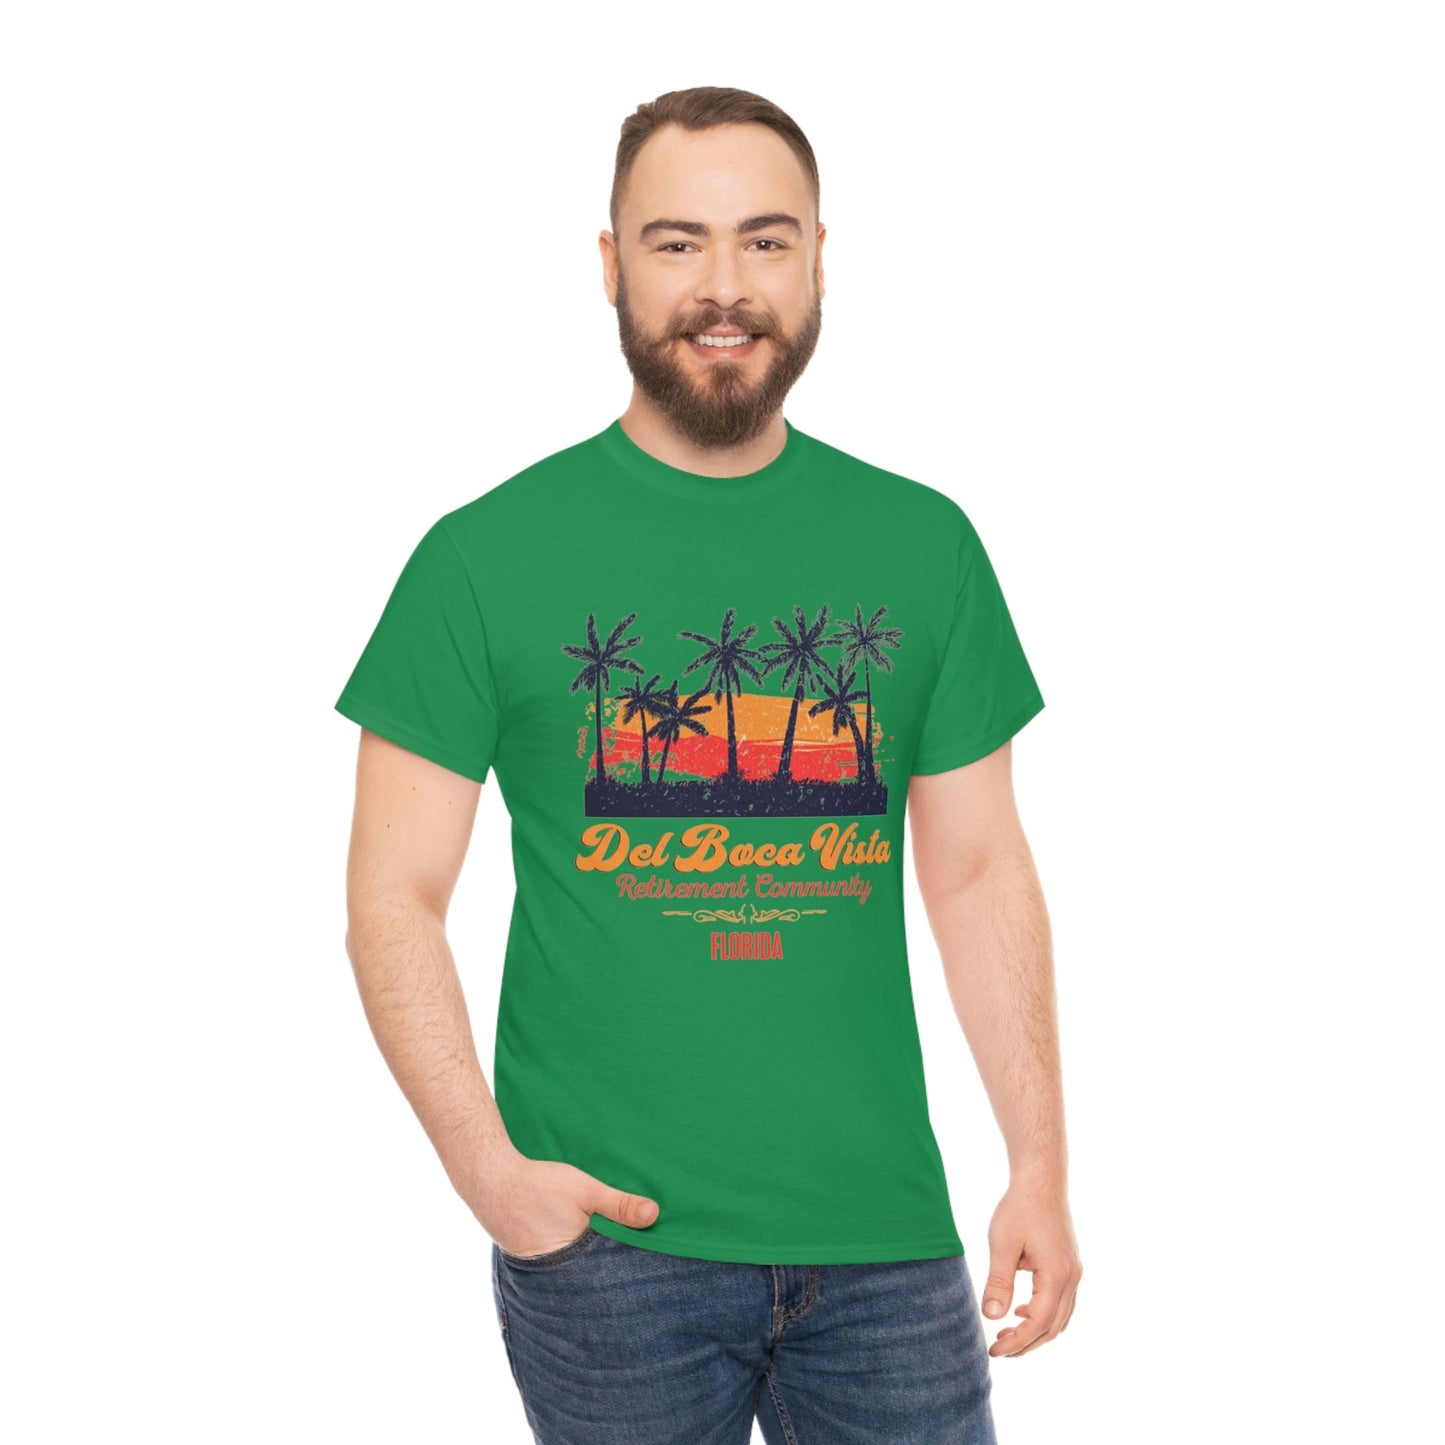 Del Boca Vista T-Shirt Funny Seinfeld inspired Tee - RetroTeeShop